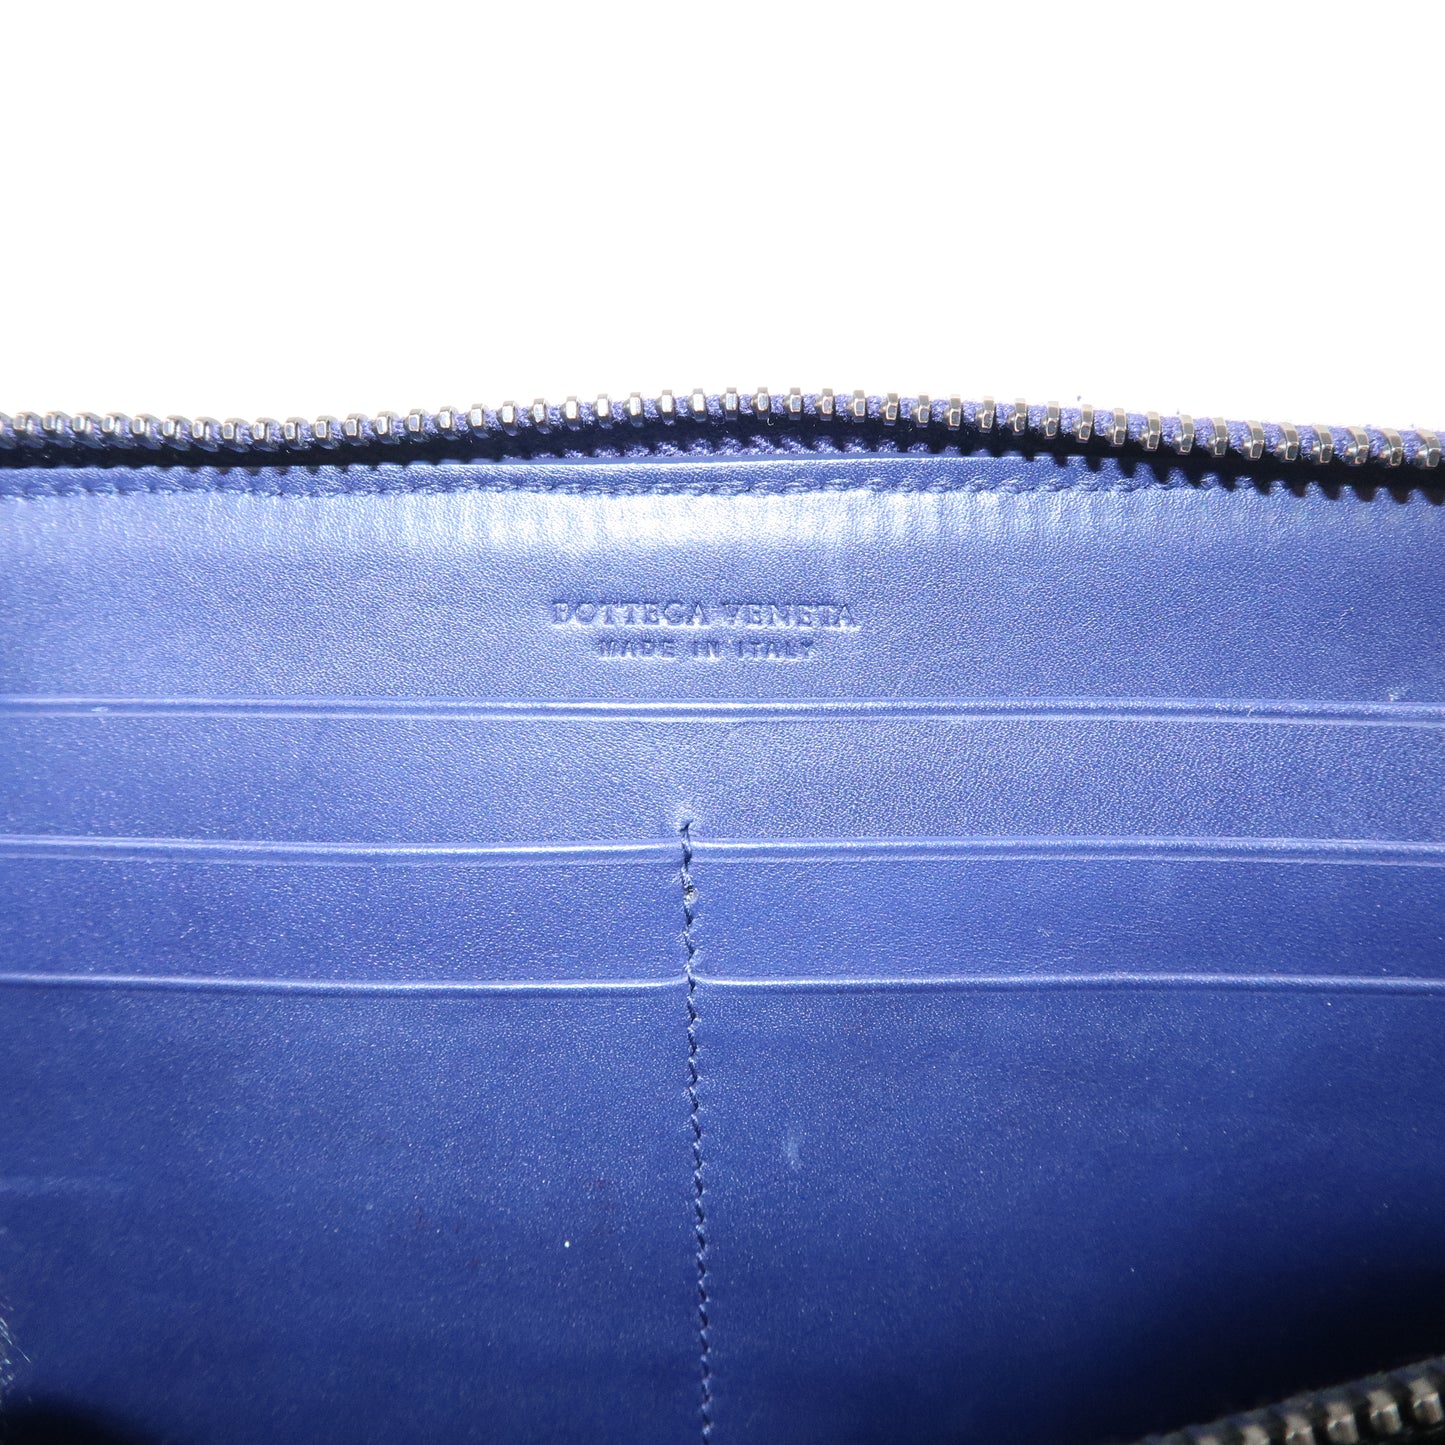 BOTTEGA VENETA Intrecciato Leather Round Zipper Long Wallet